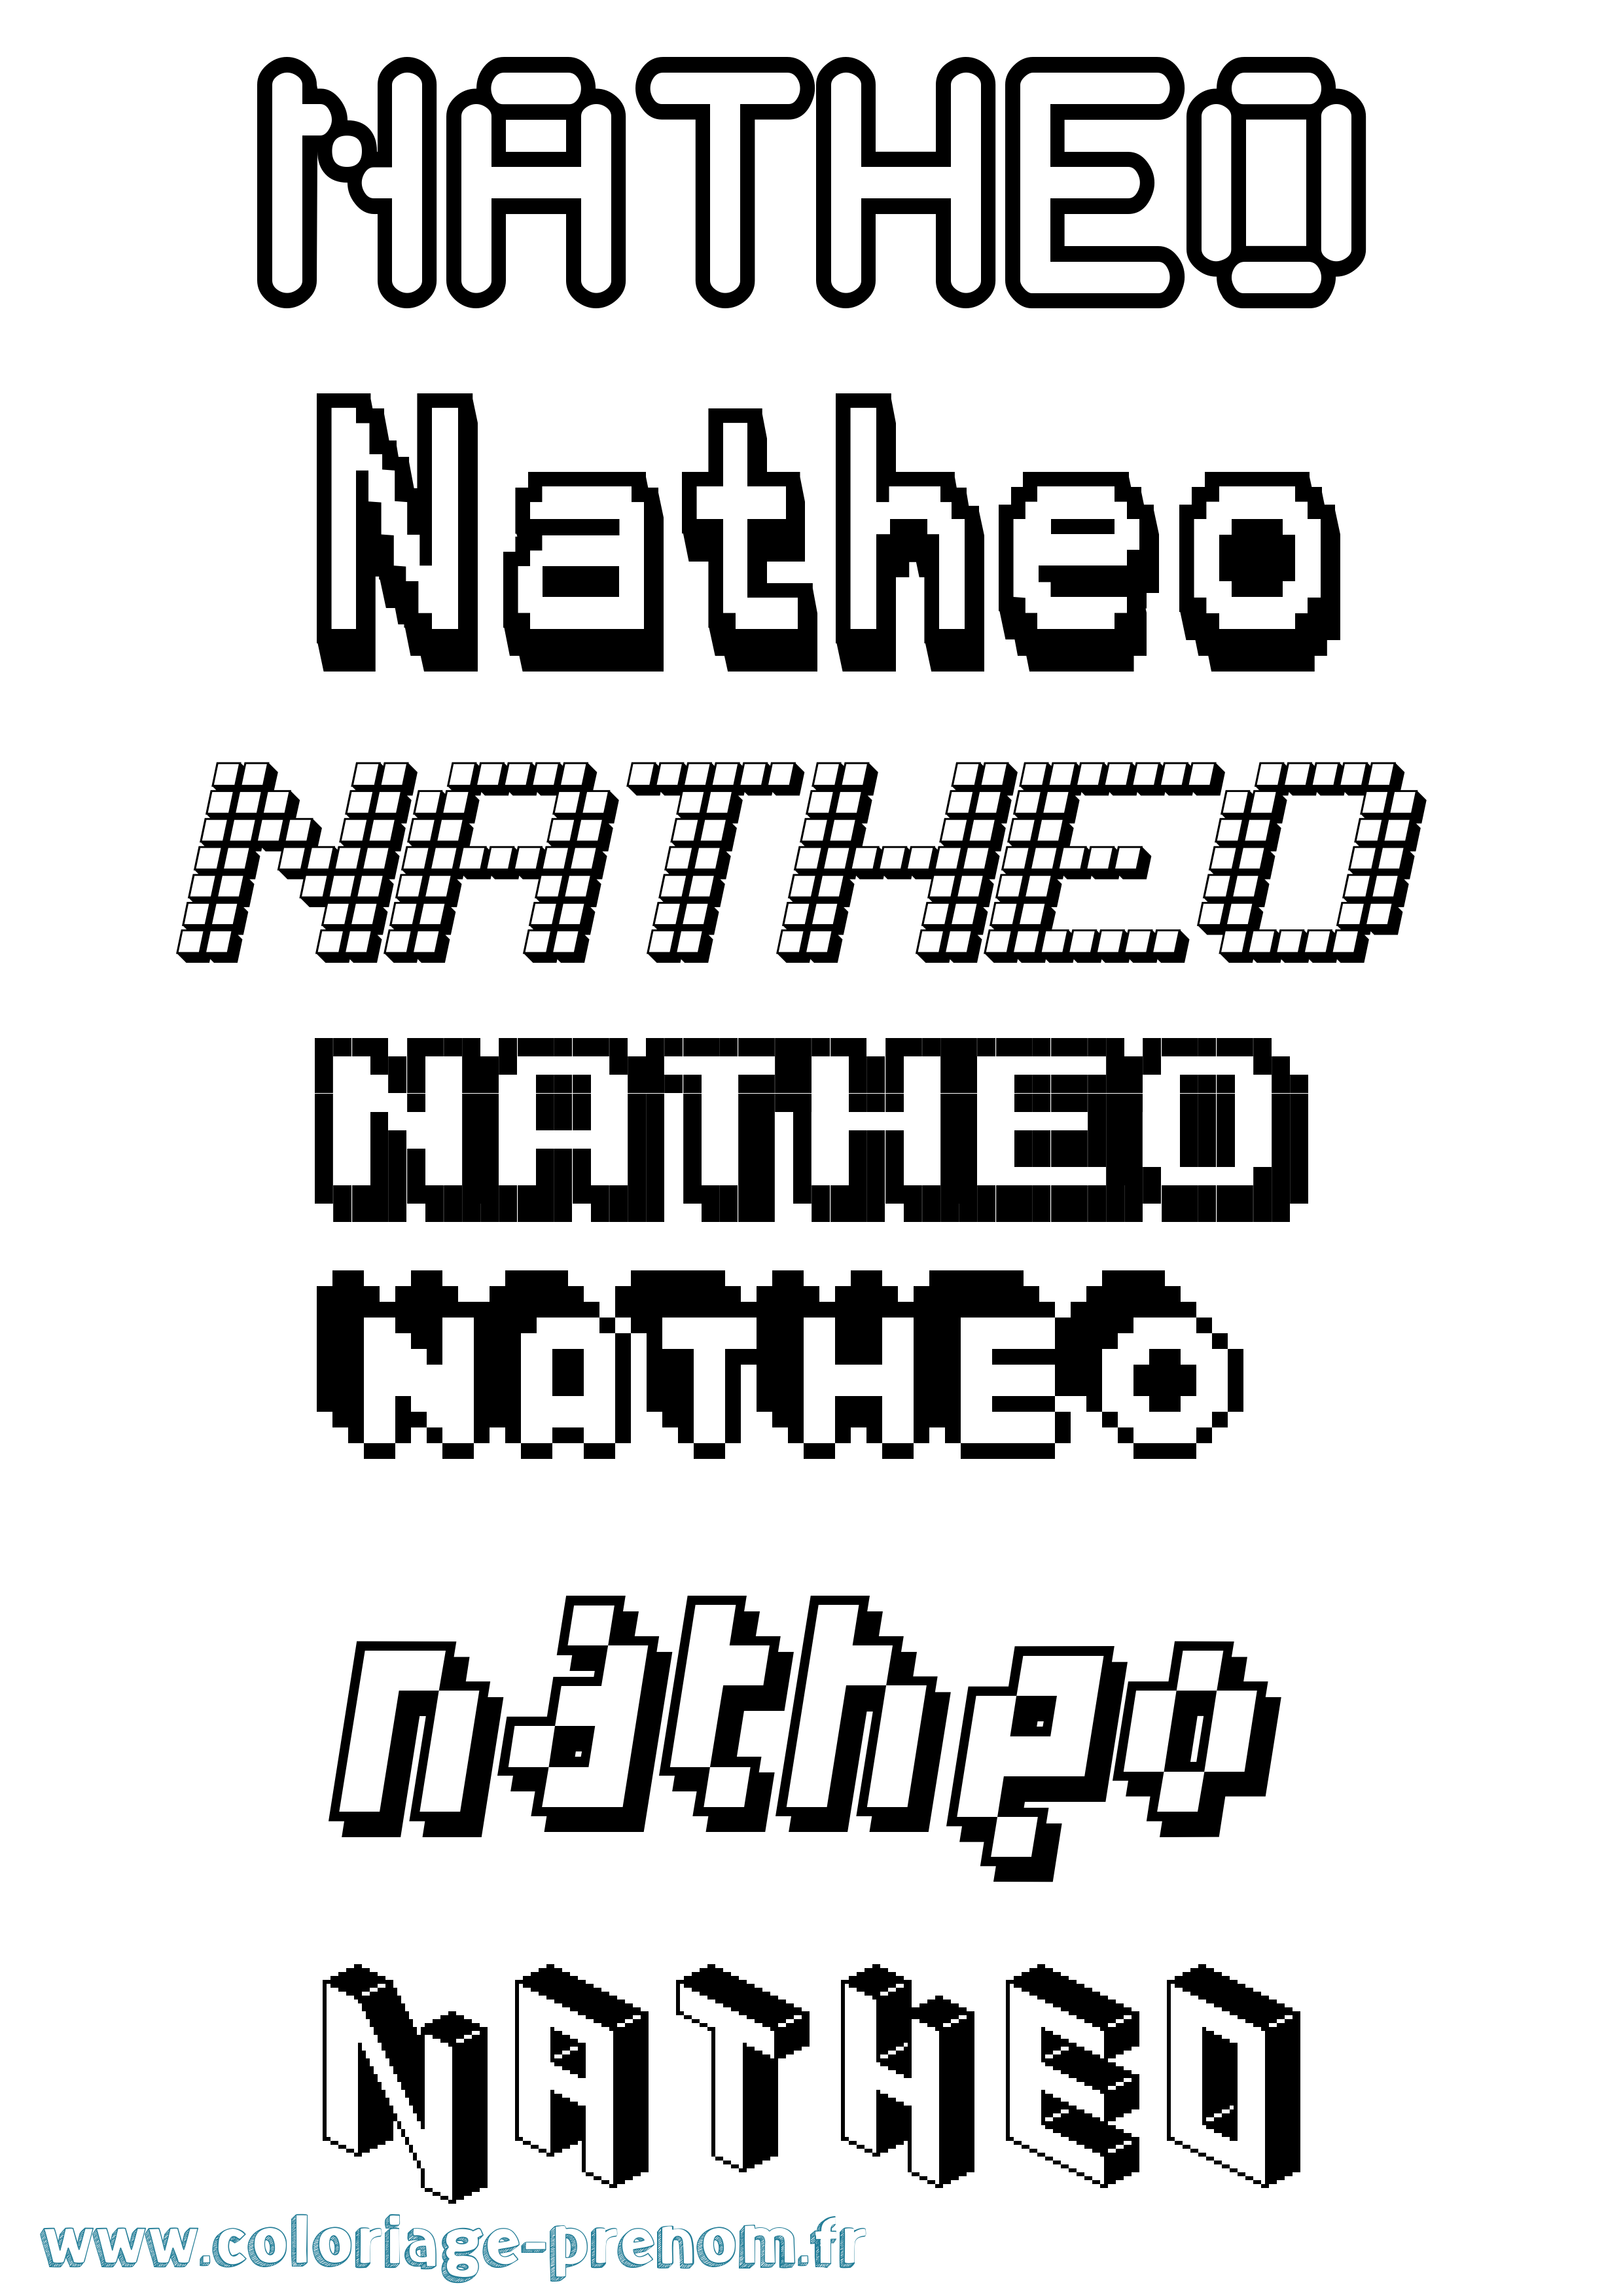 Coloriage prénom Natheo Pixel